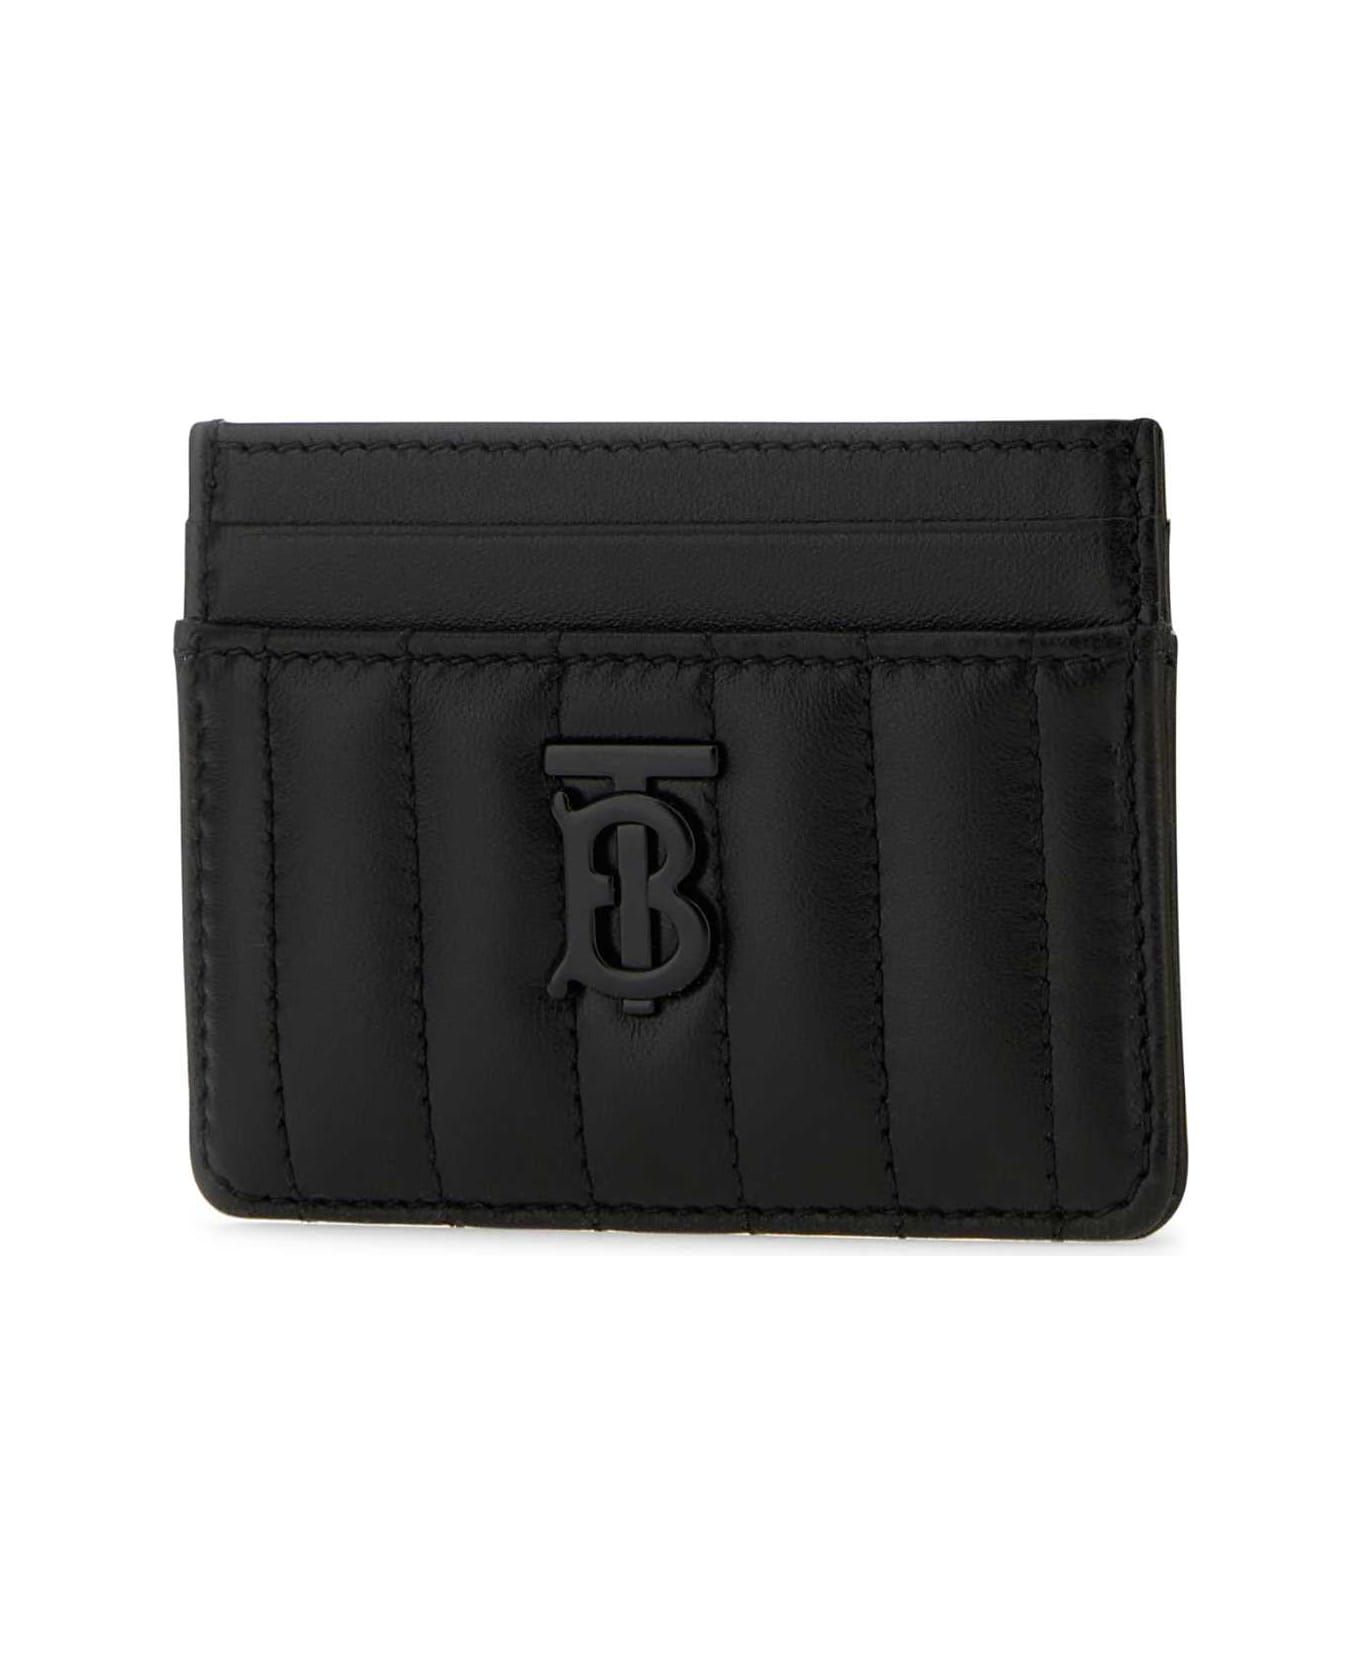 Burberry Black Leather Card Holder - BLACKBLACK